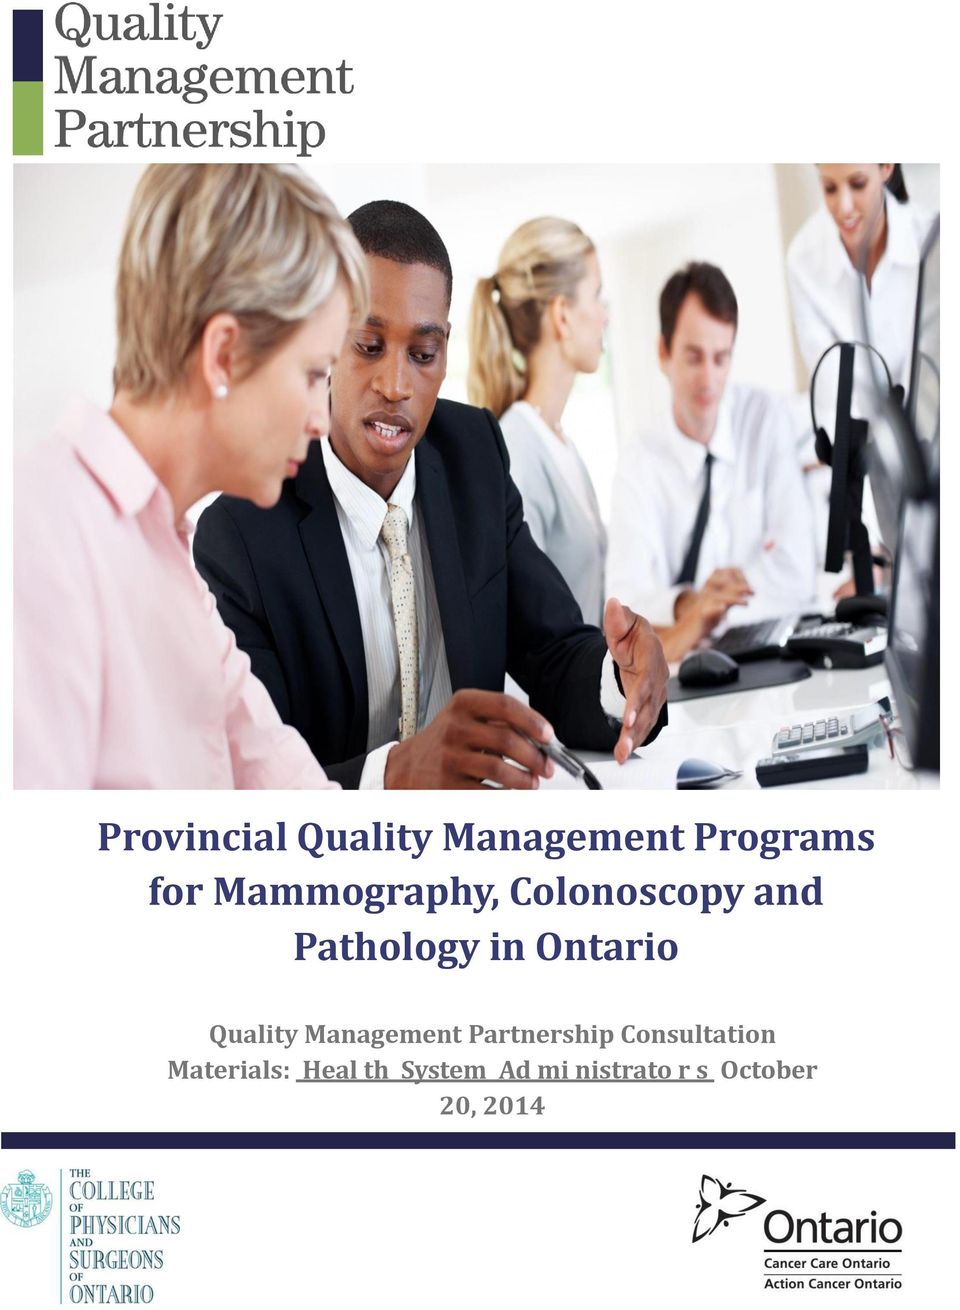 Quality Management Partnership Consultation